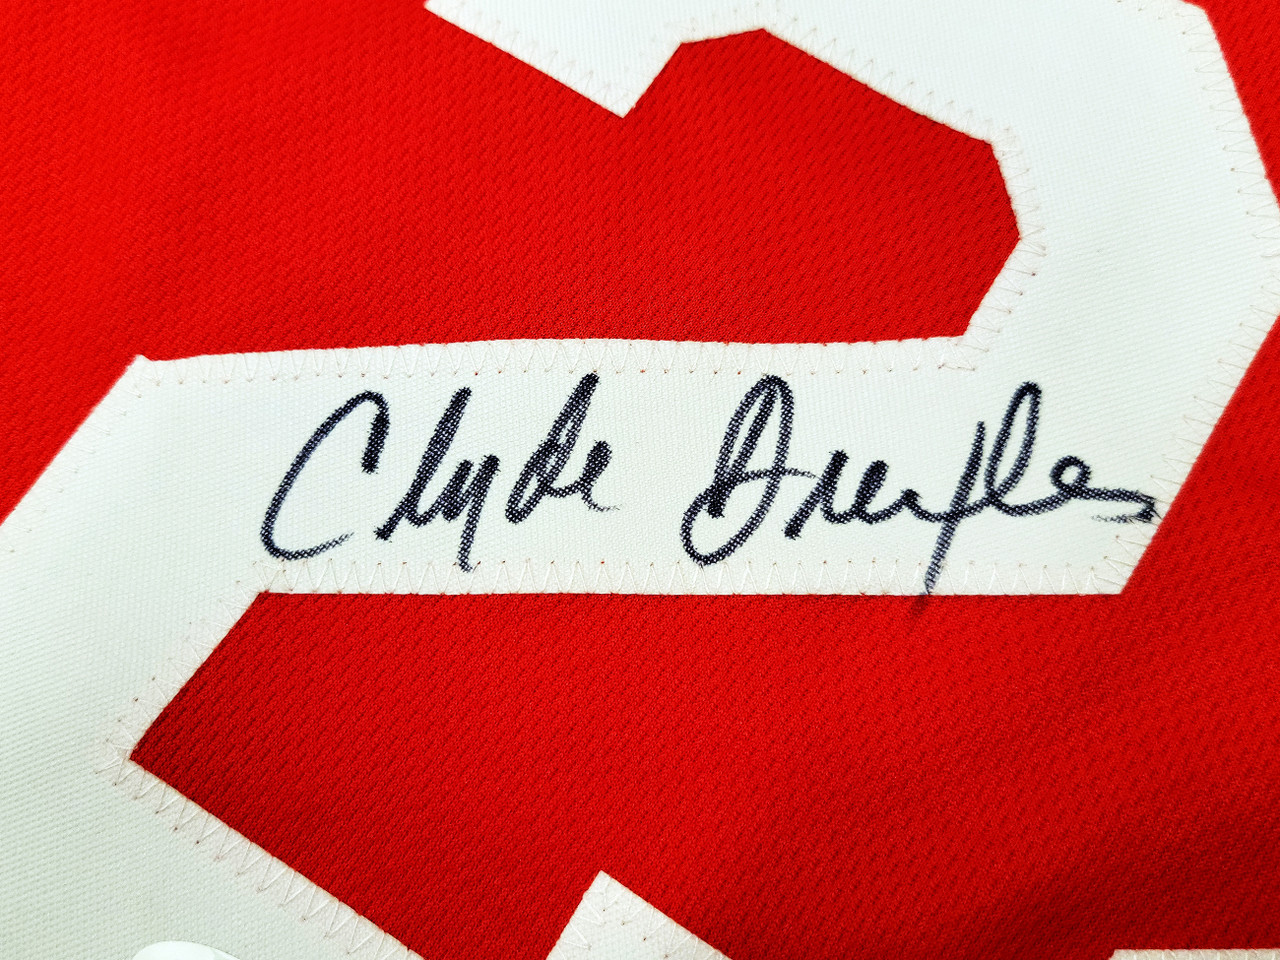 Clyde Drexler Signed Houston Rockets Jersey SSG Certified